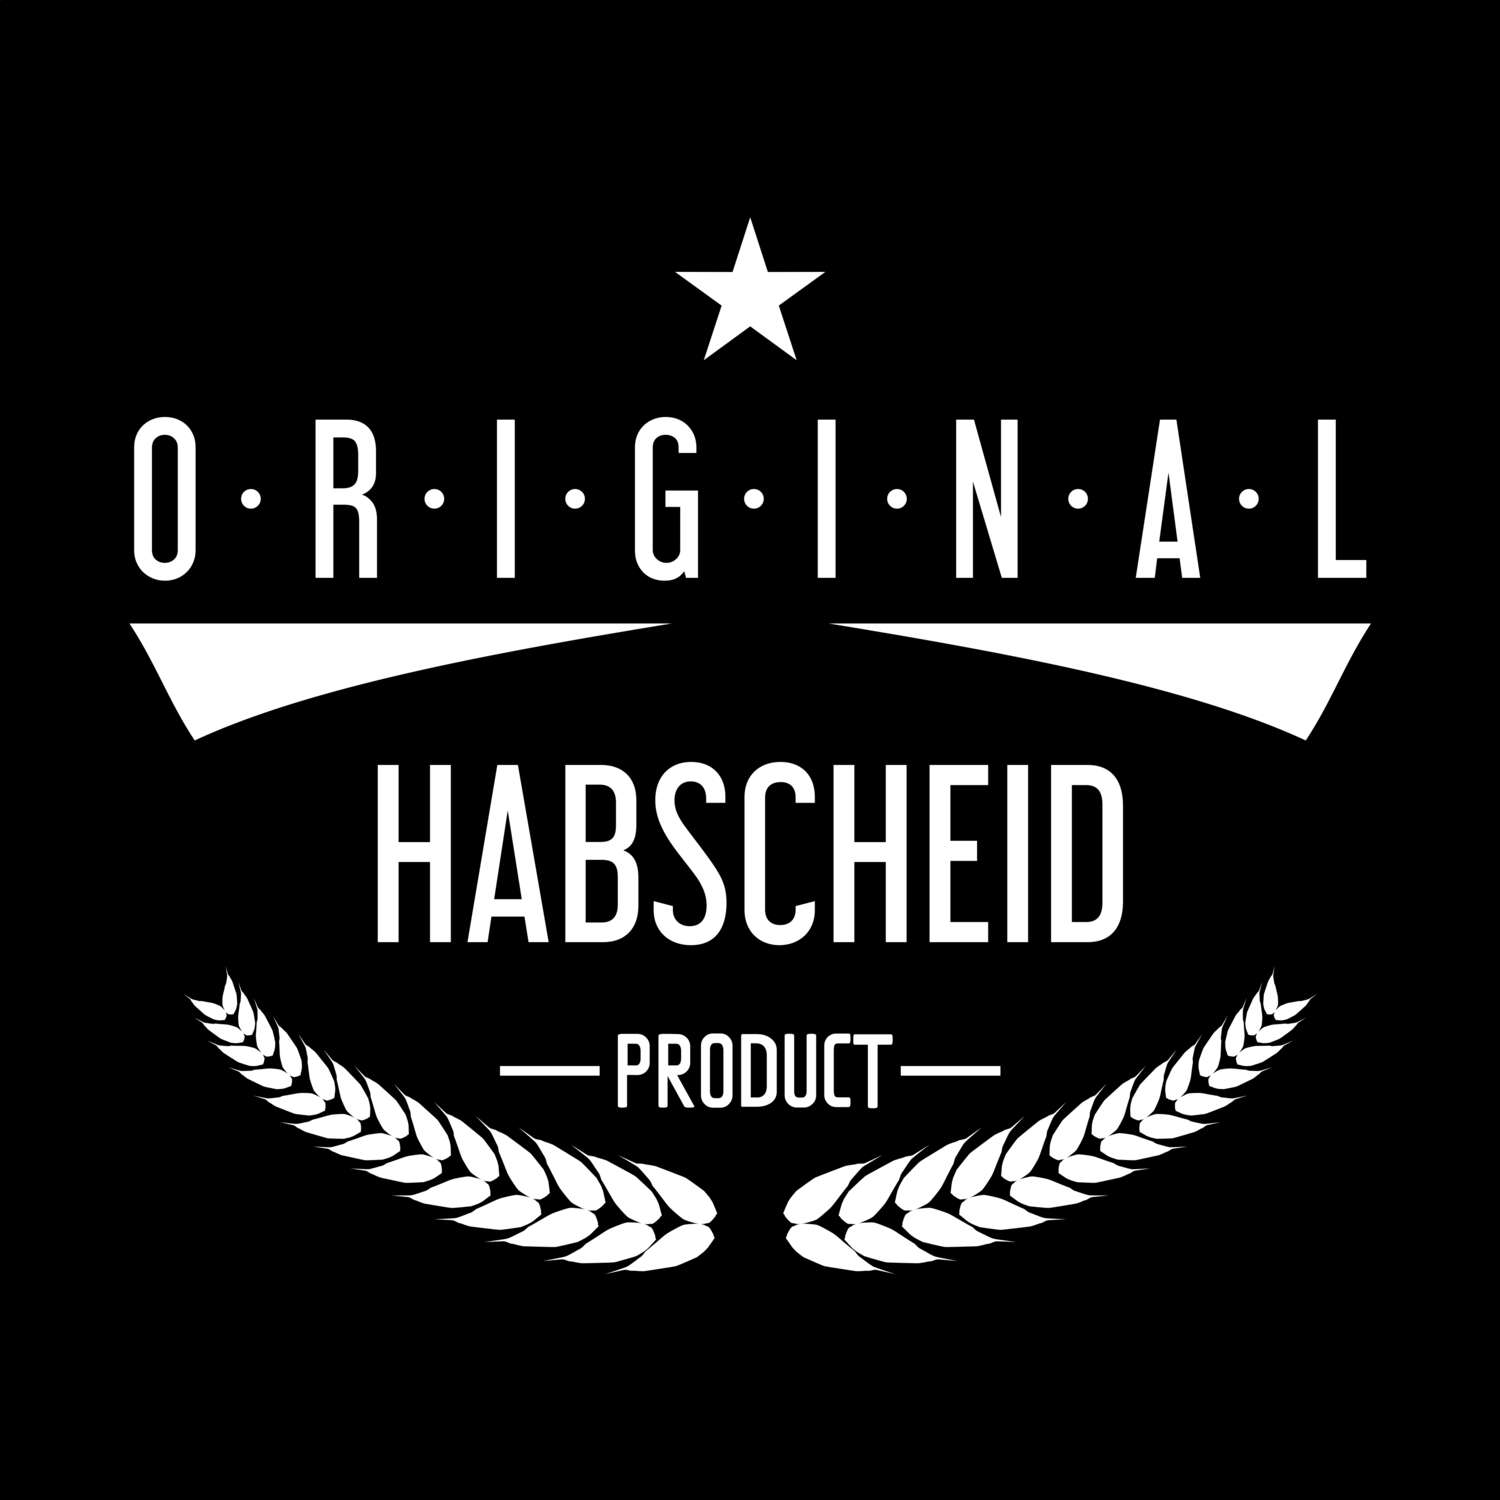 Habscheid T-Shirt »Original Product«